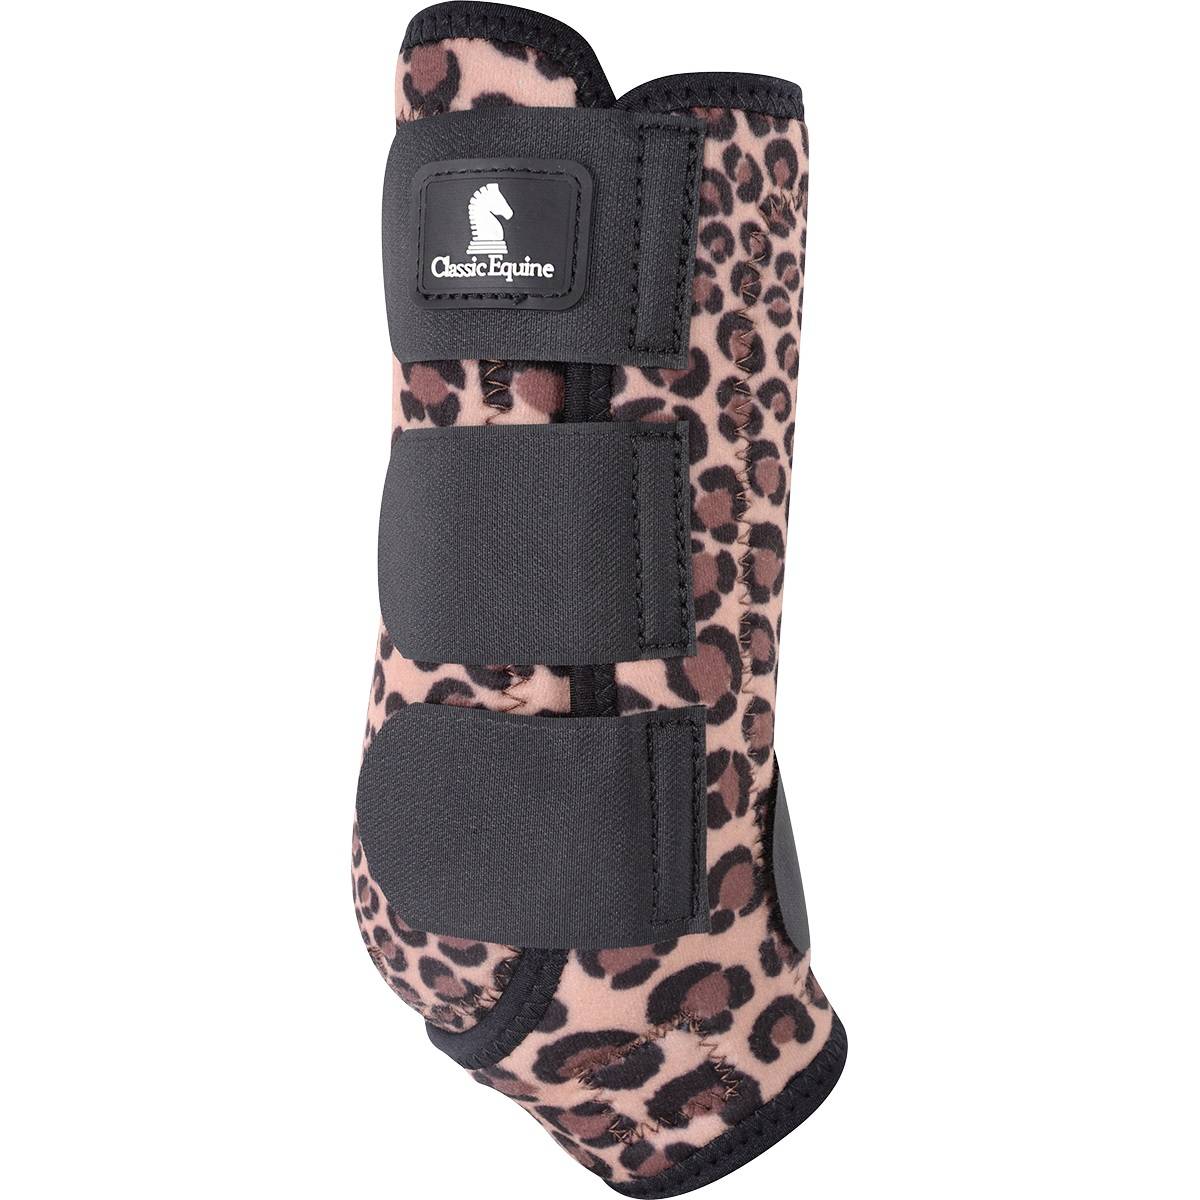 cheetah splint boots